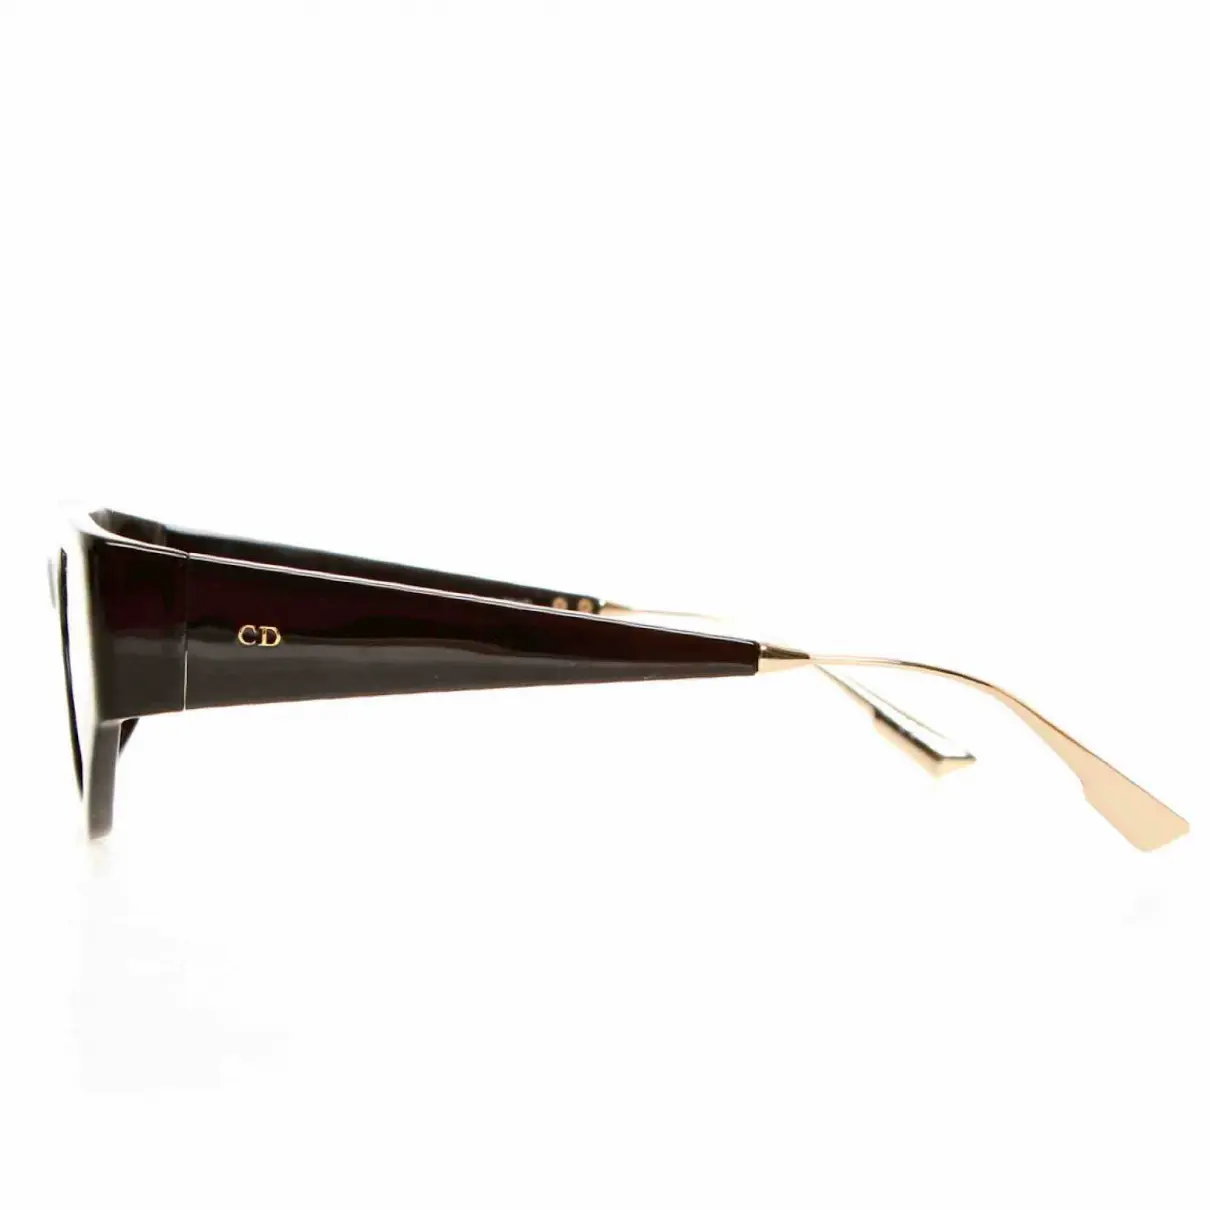 Buy Dior CatstyleDior1 oversized sunglasses online